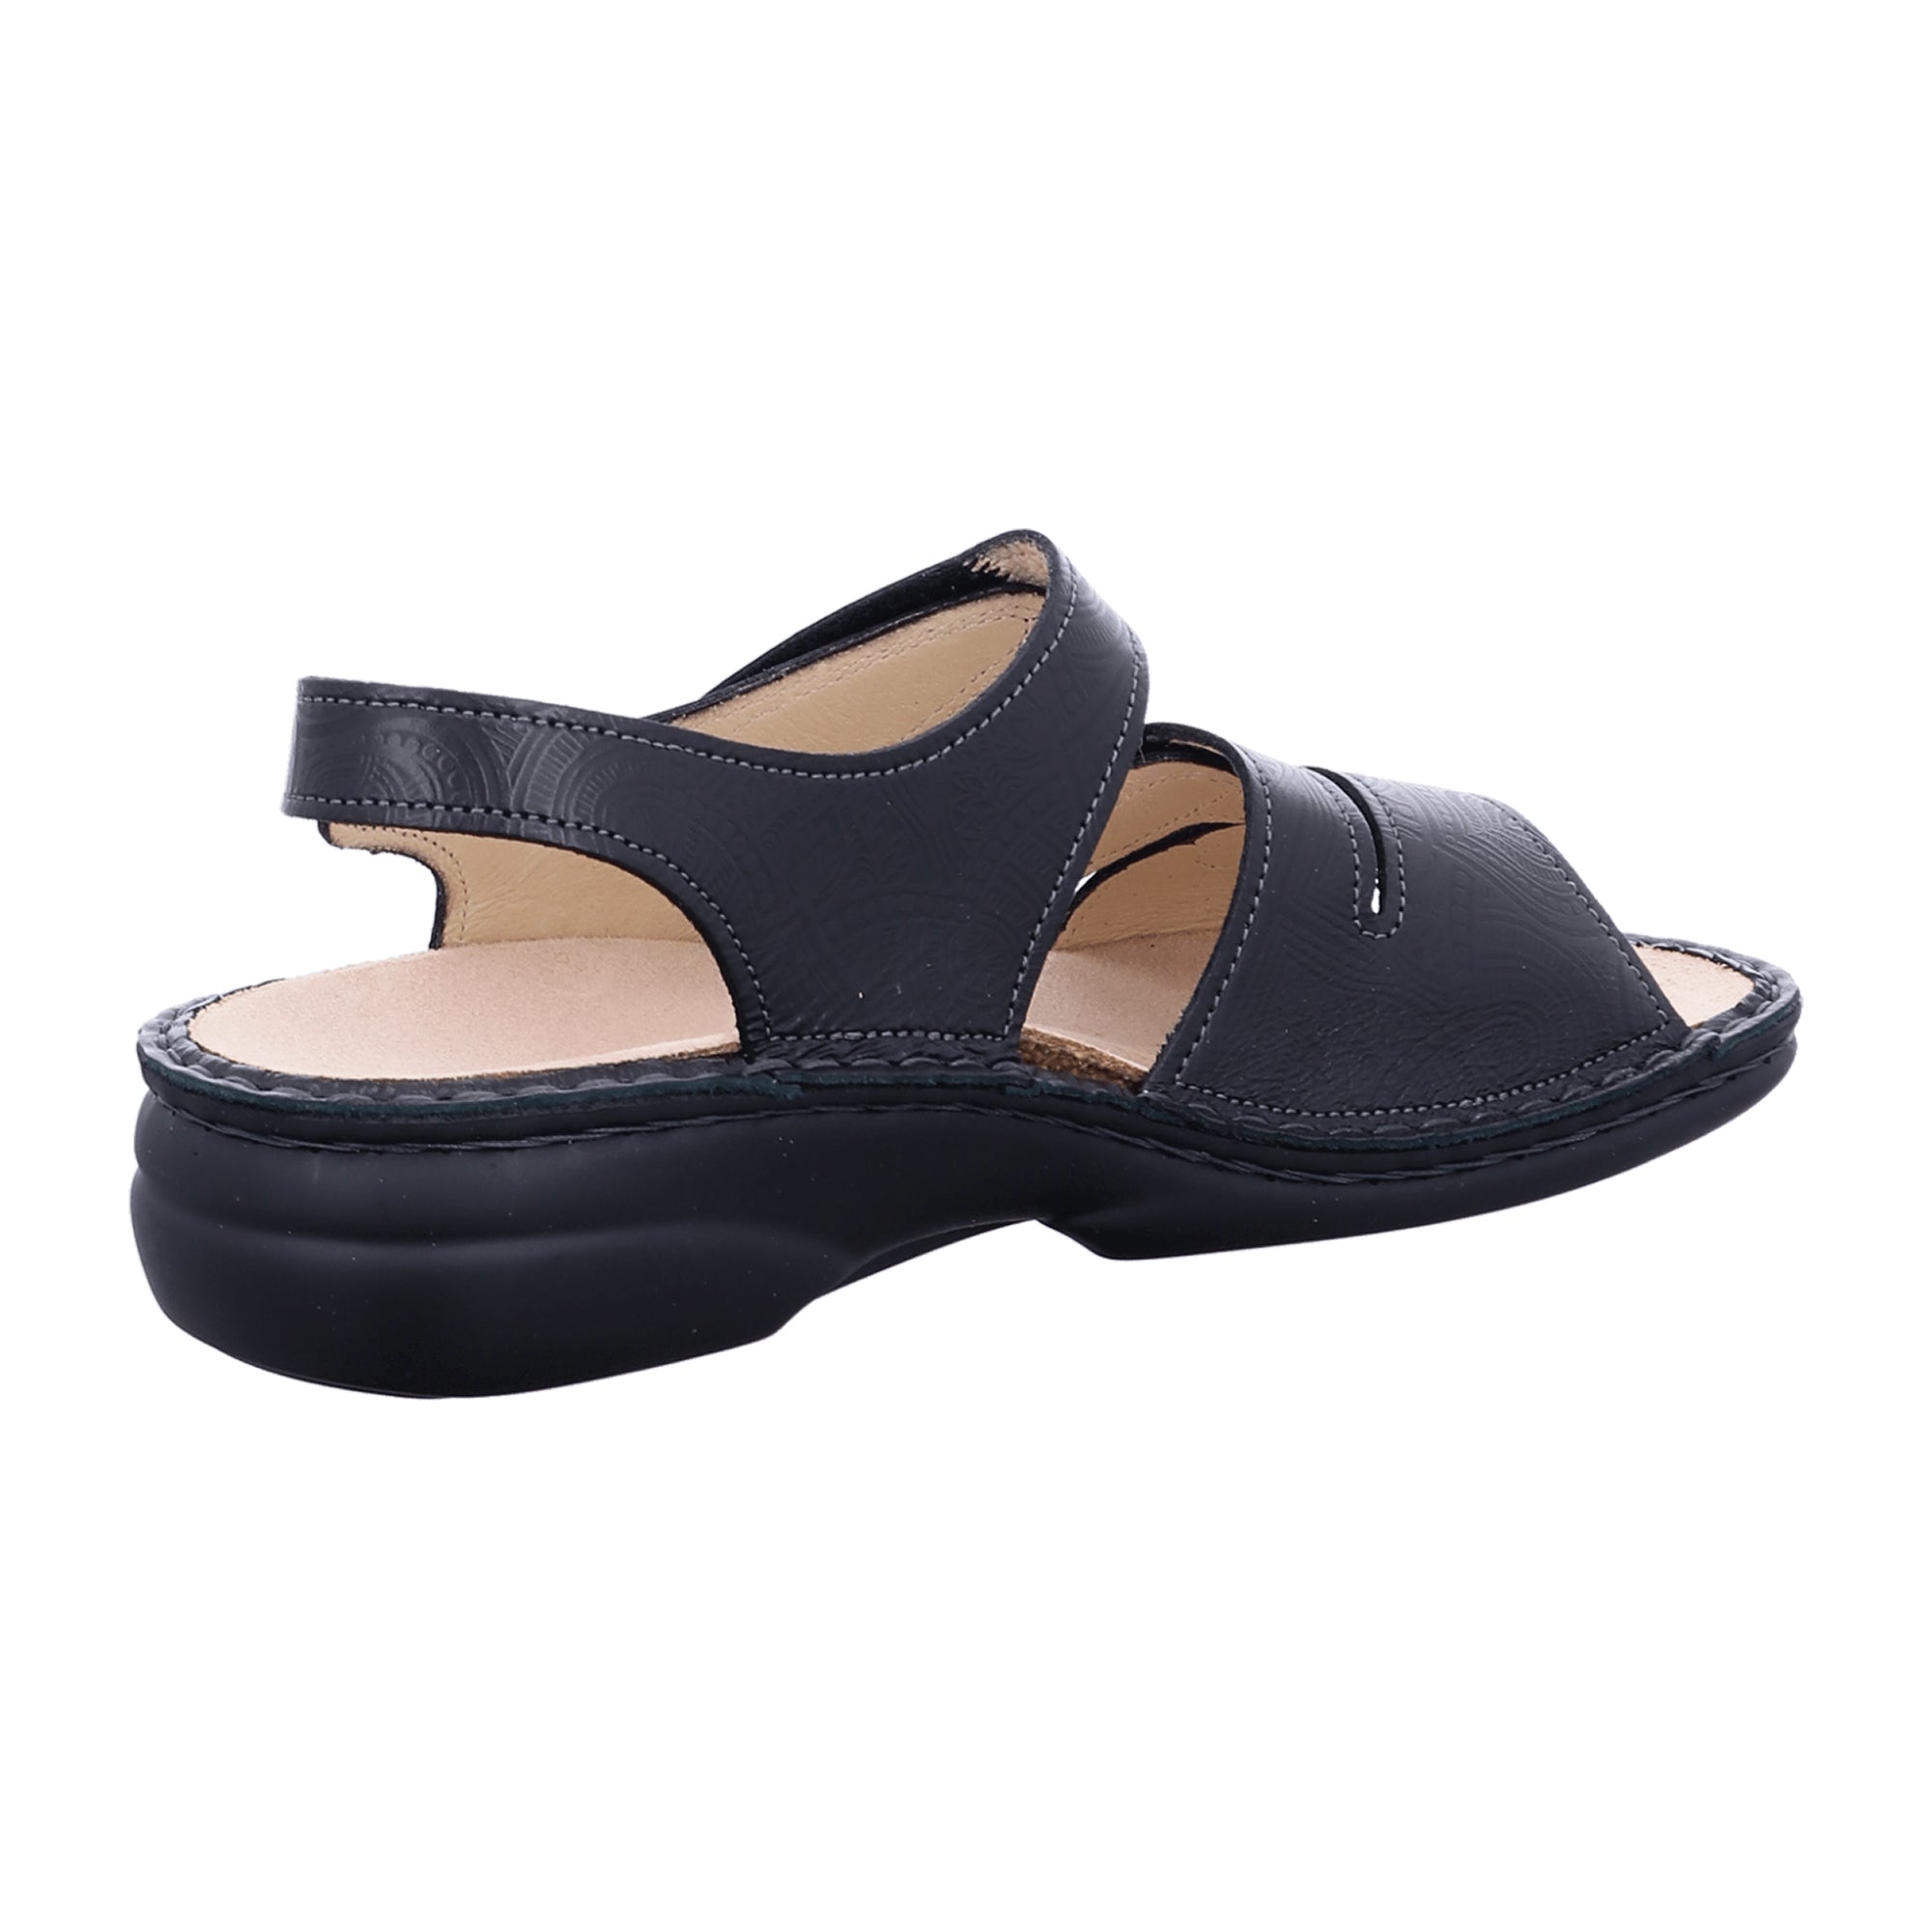 Finn Comfort 2562-760099 Women's Black Comfort Shoes - Stylish & Supportive